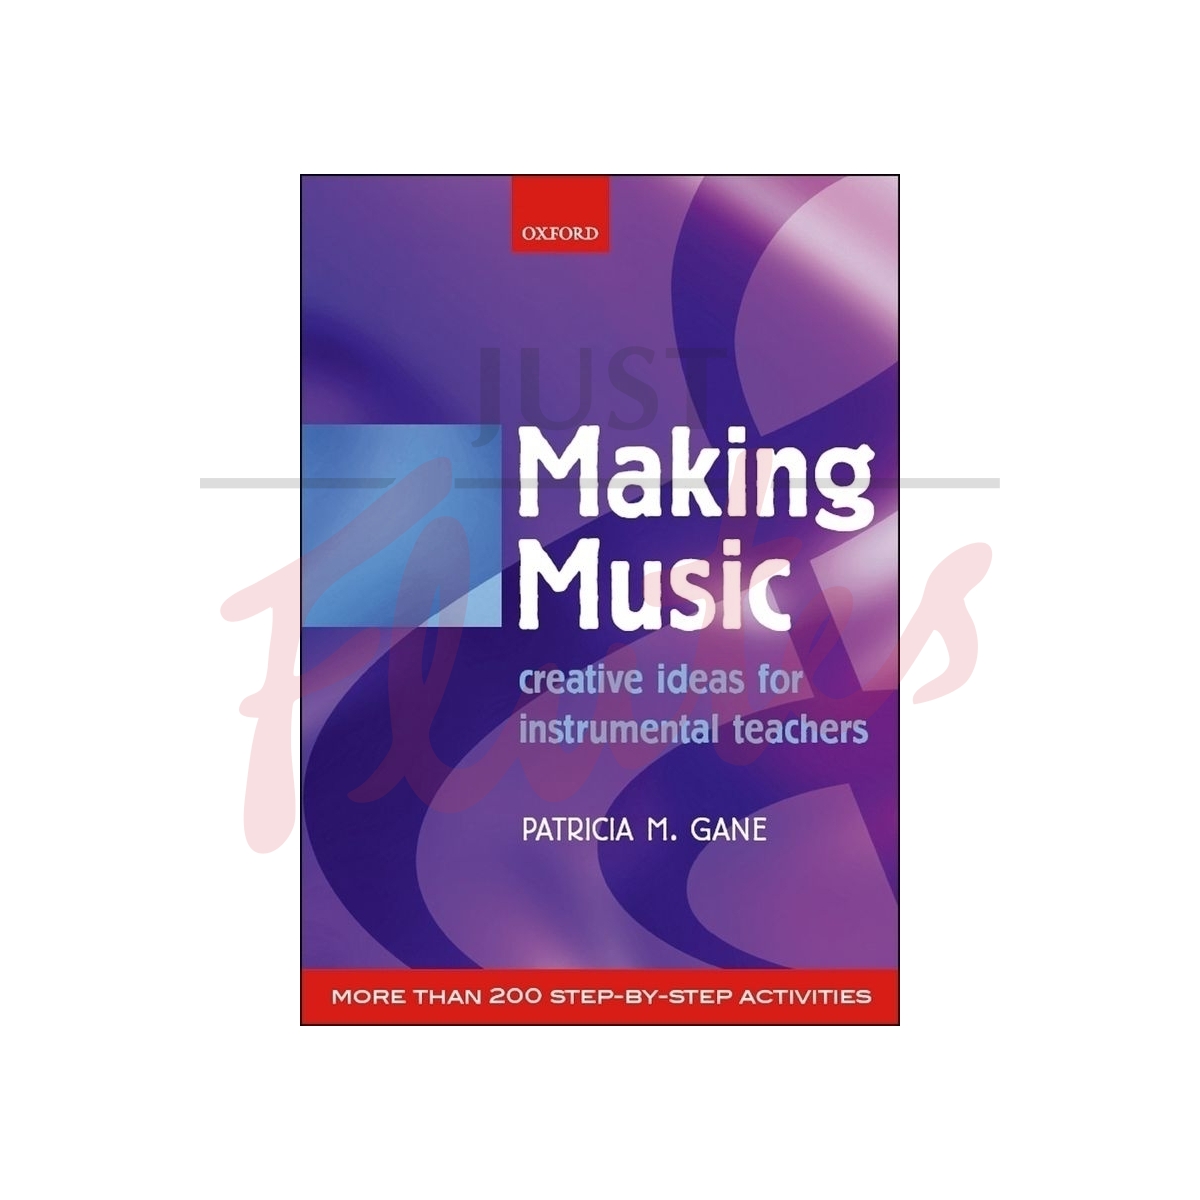 Making Music: Creative Ideas for Instrumental Teachers